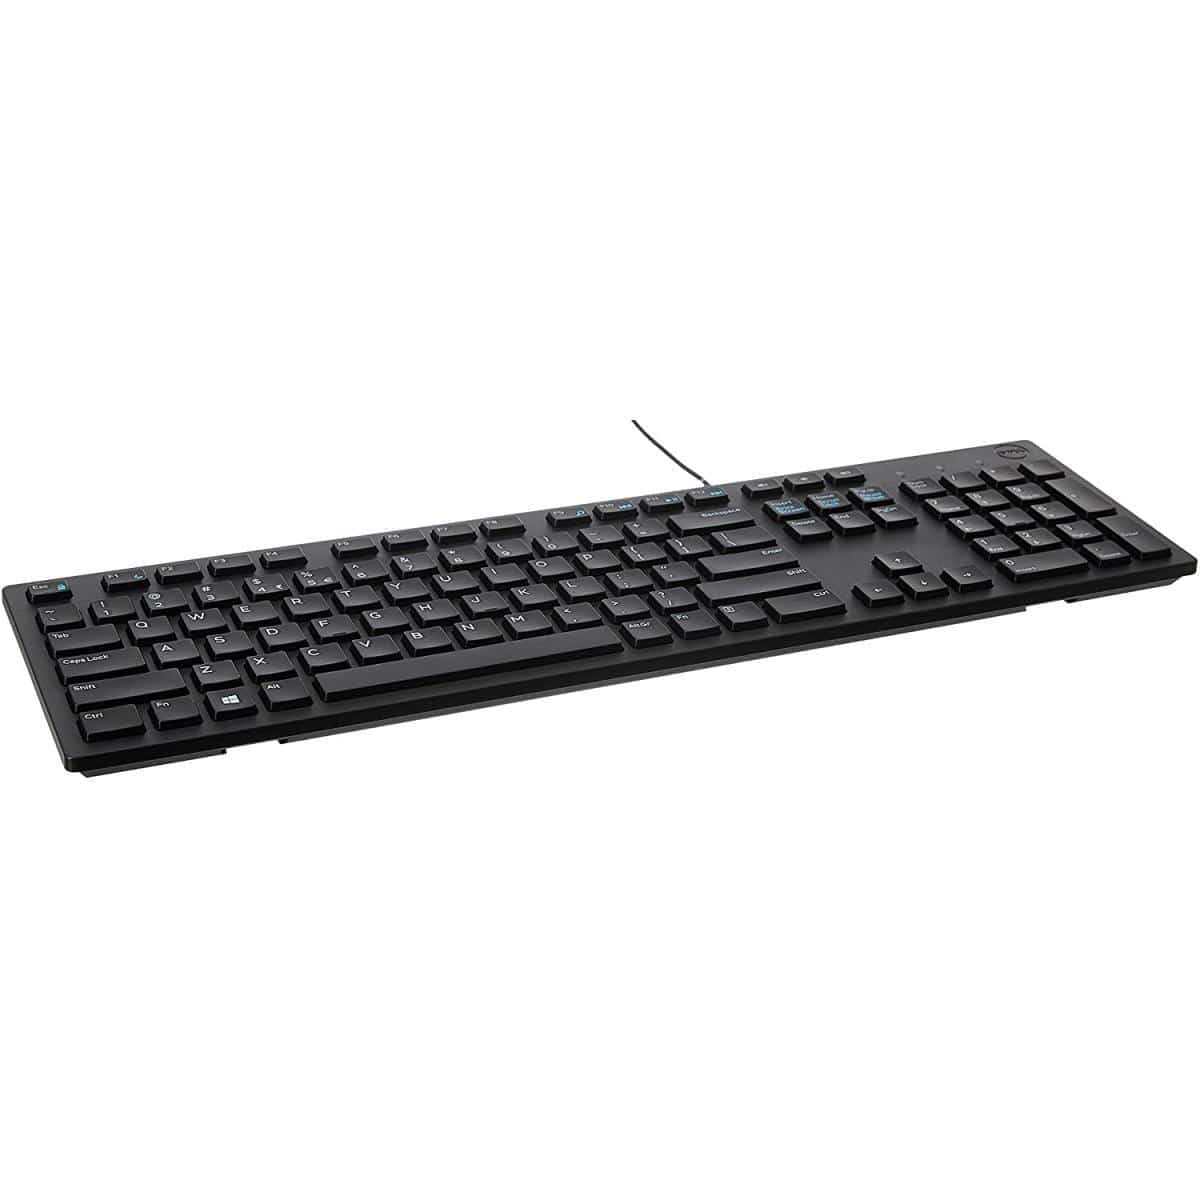 DELL OFFICE KEYBOARD Dell KB216 Multimedia Wired Keyboard - Black (عربي)